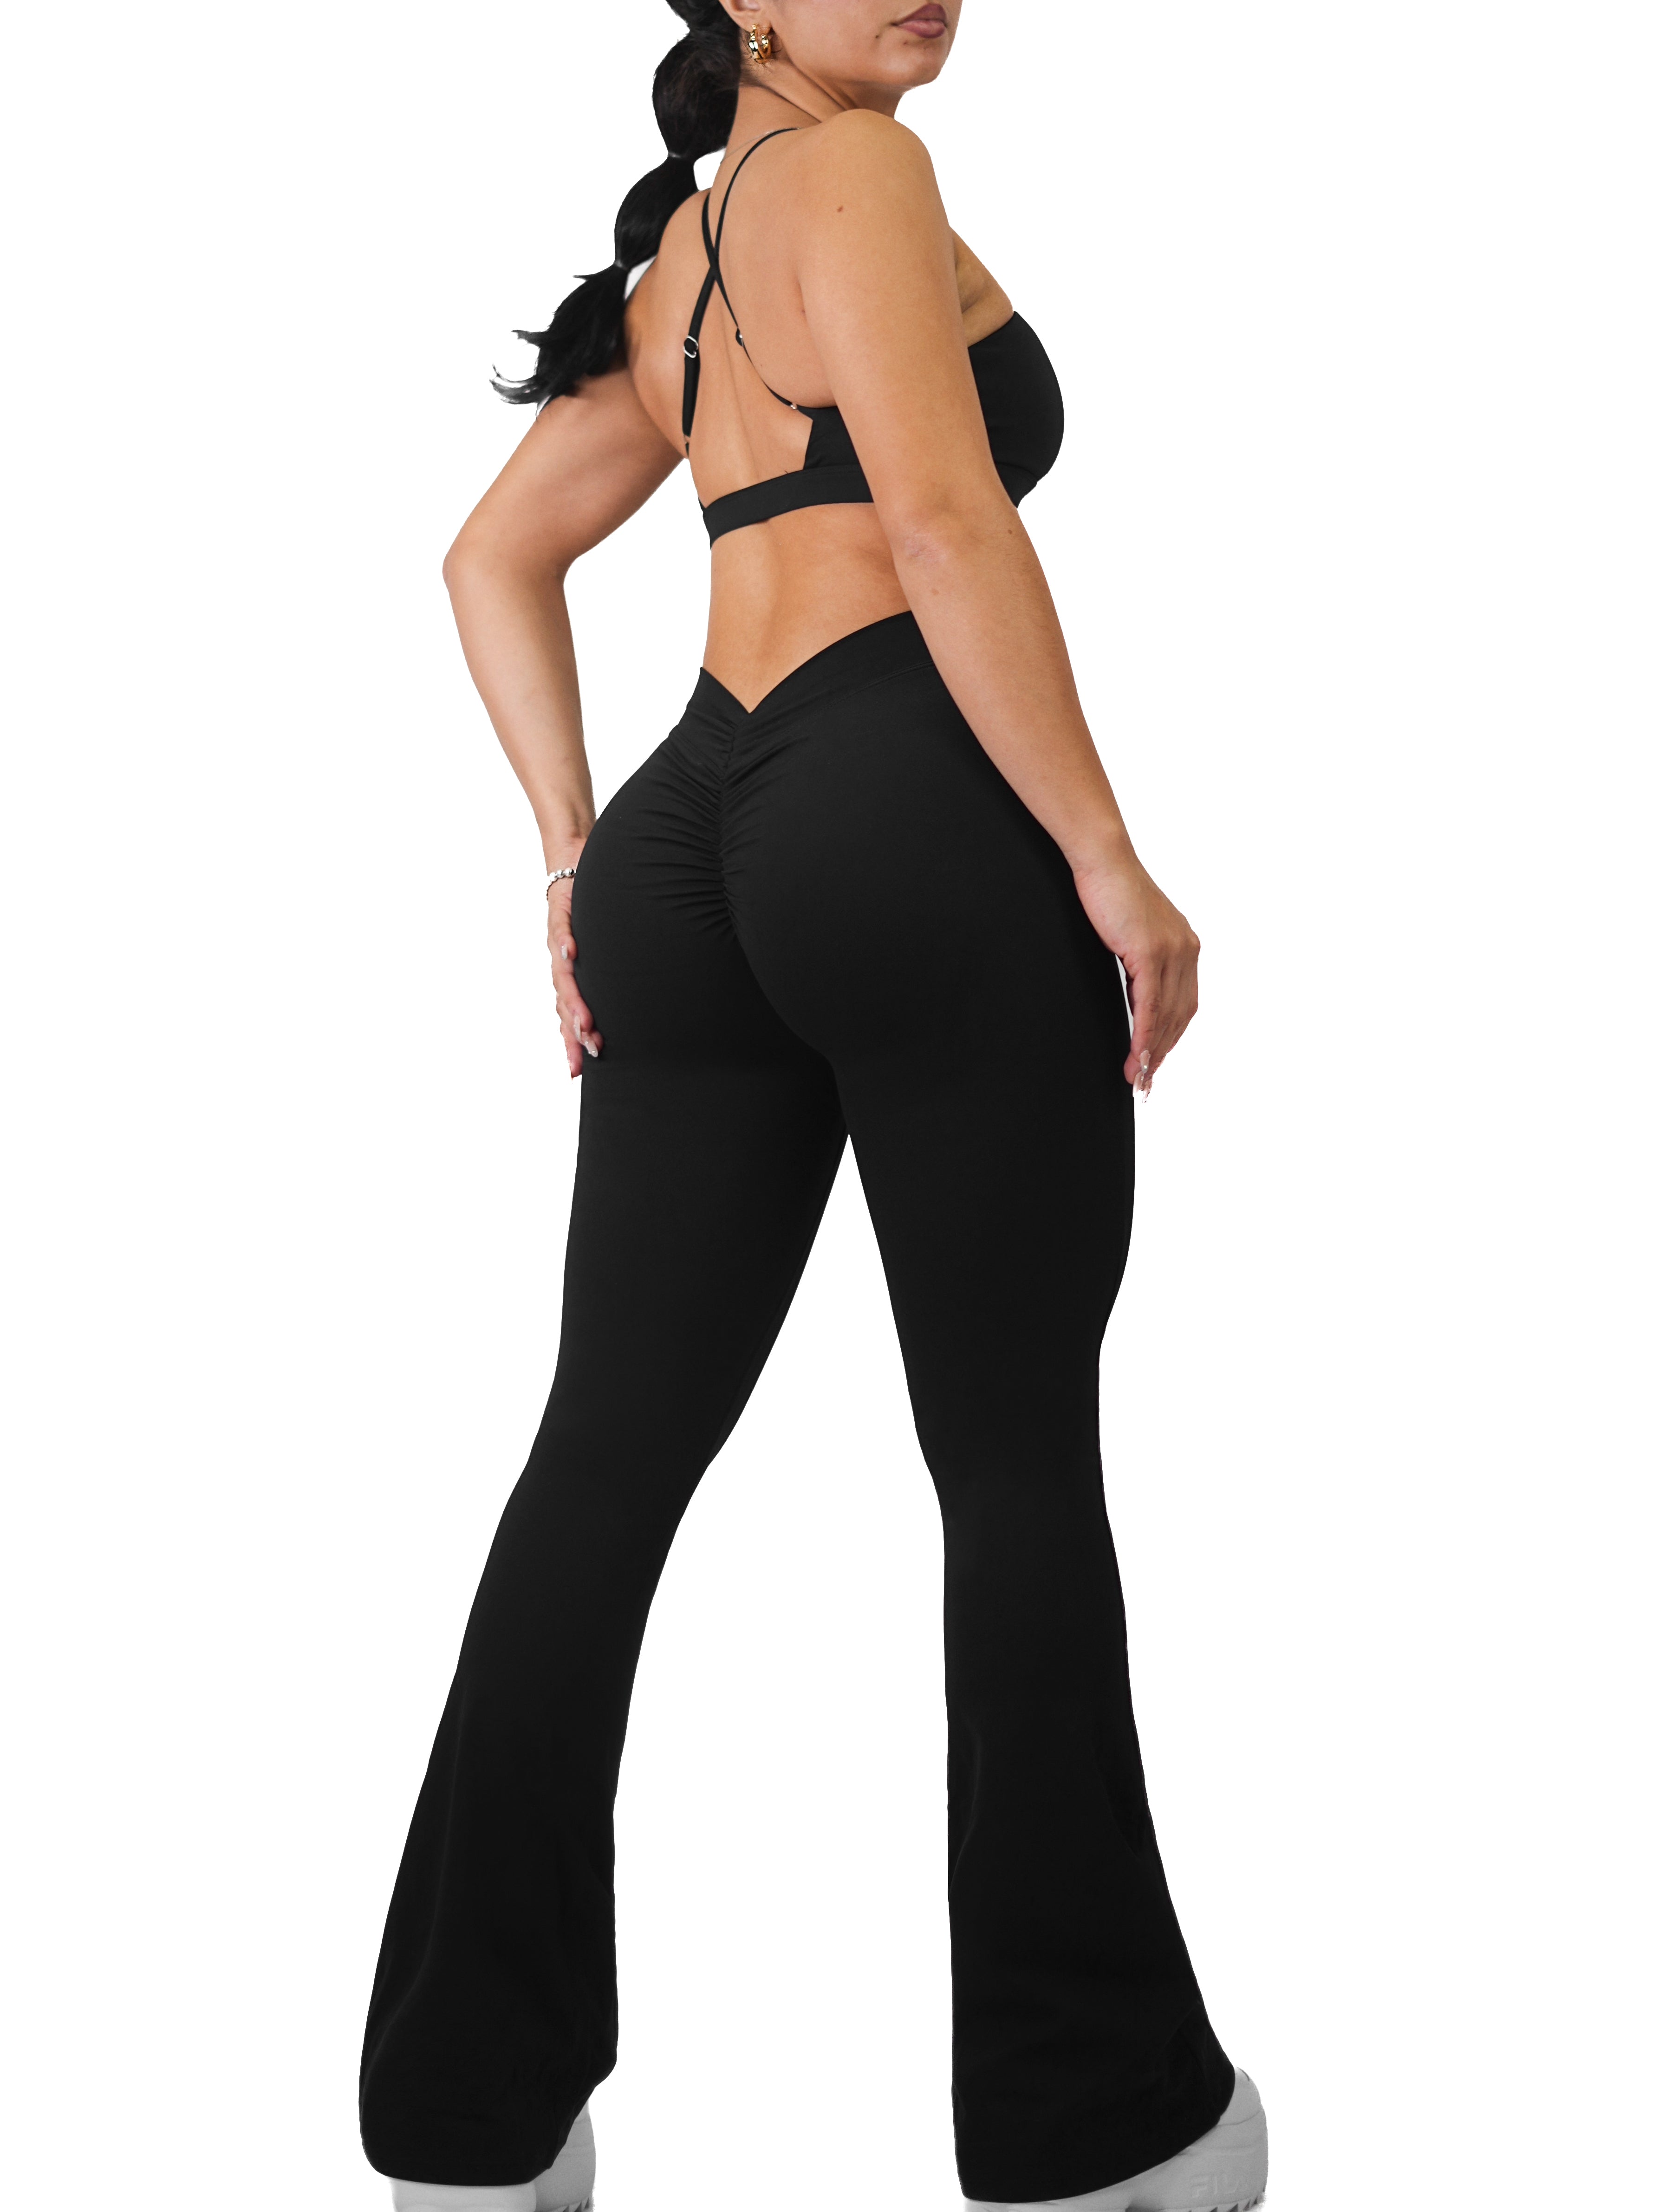 Low Back Scrunch Flare Leggings (Black) – Fitness Fashioness